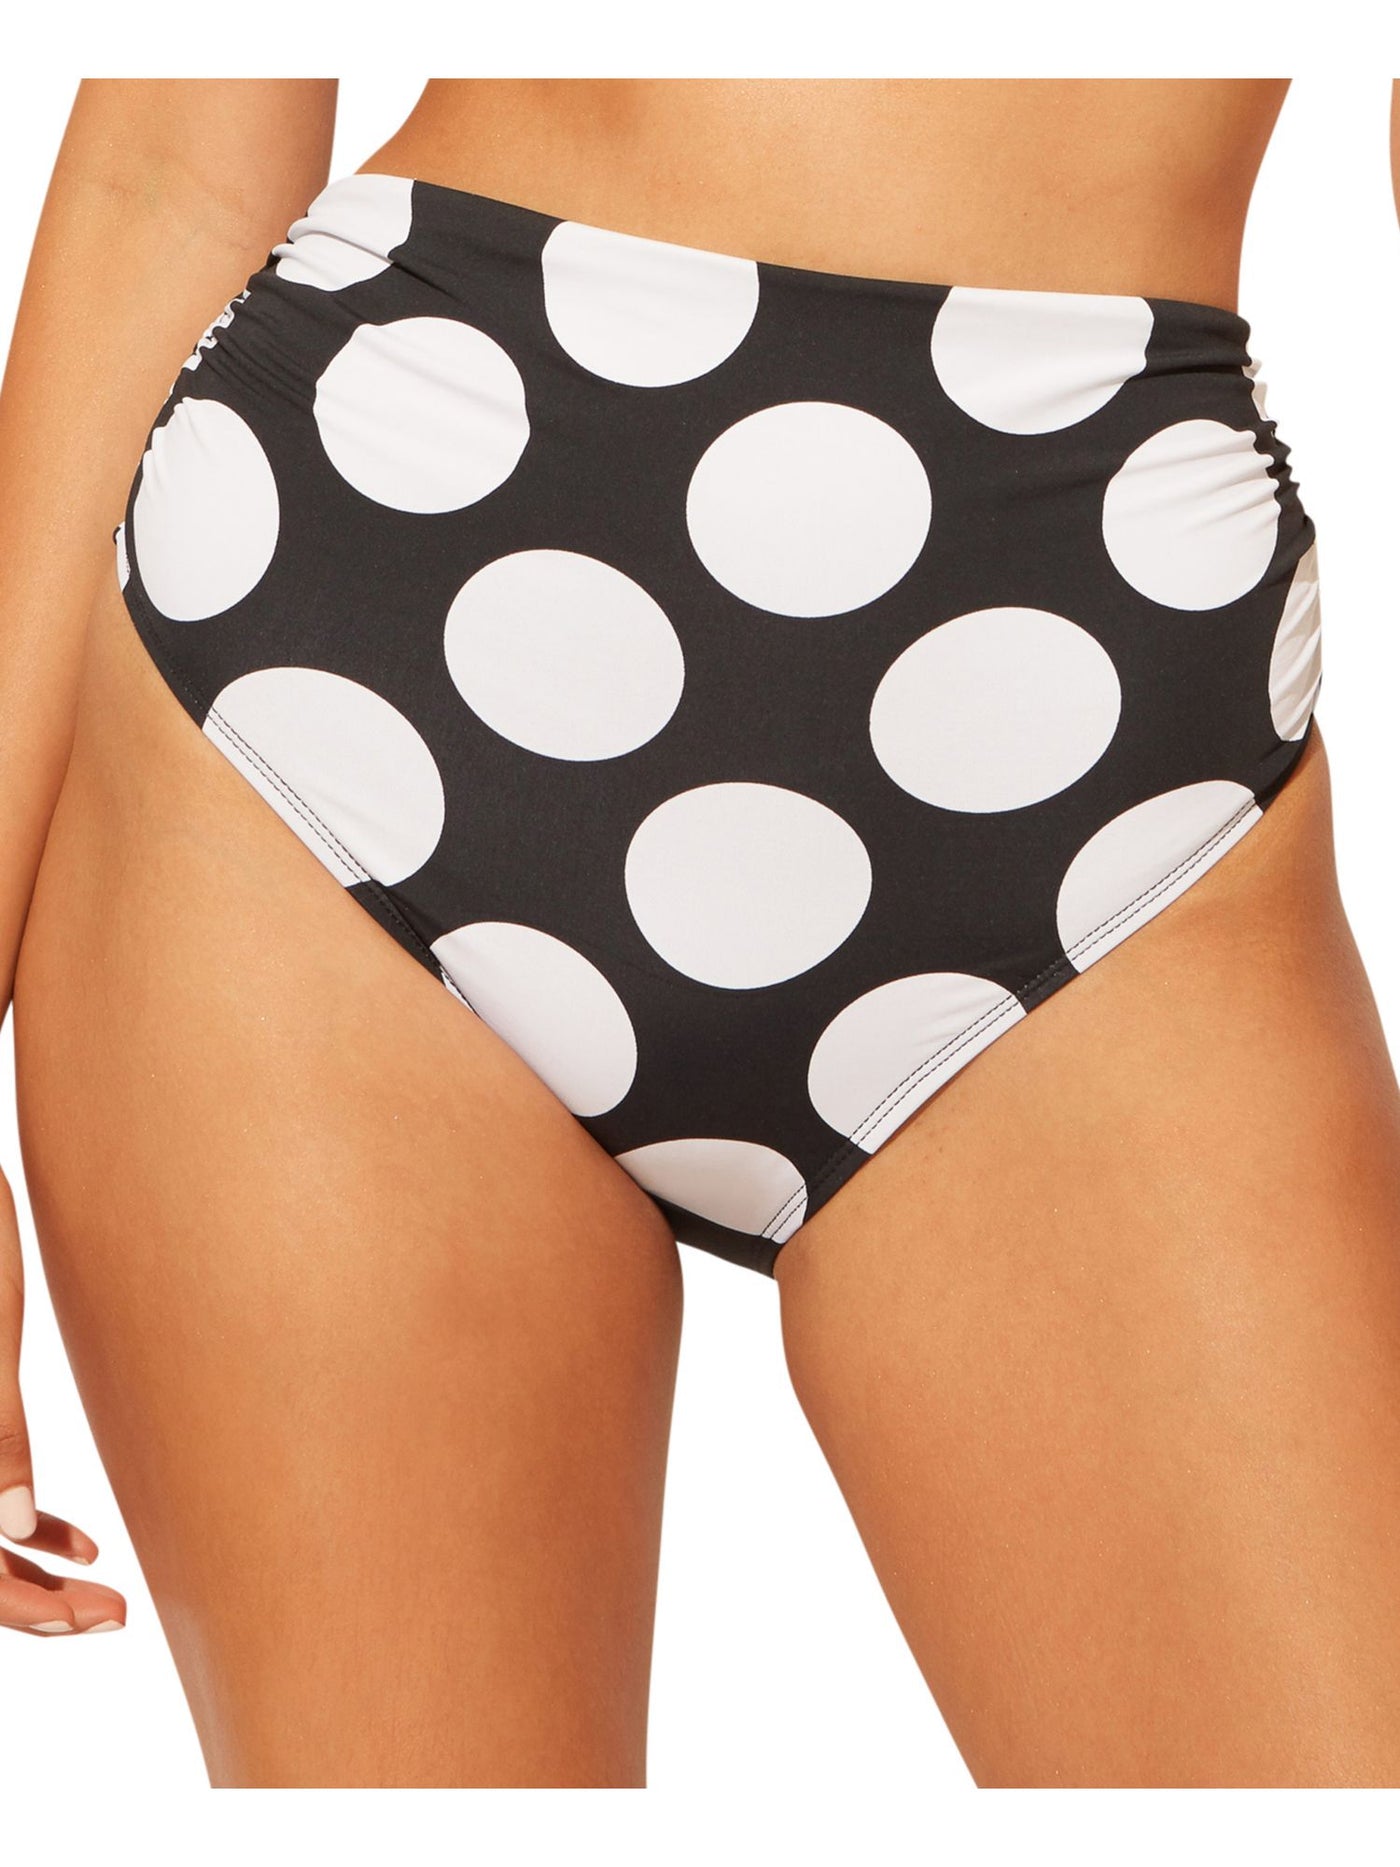 BLEU Women's White Polka Dot Stretch Ruched Bikini Full Coverage High Waisted Swimsuit Bottom 8